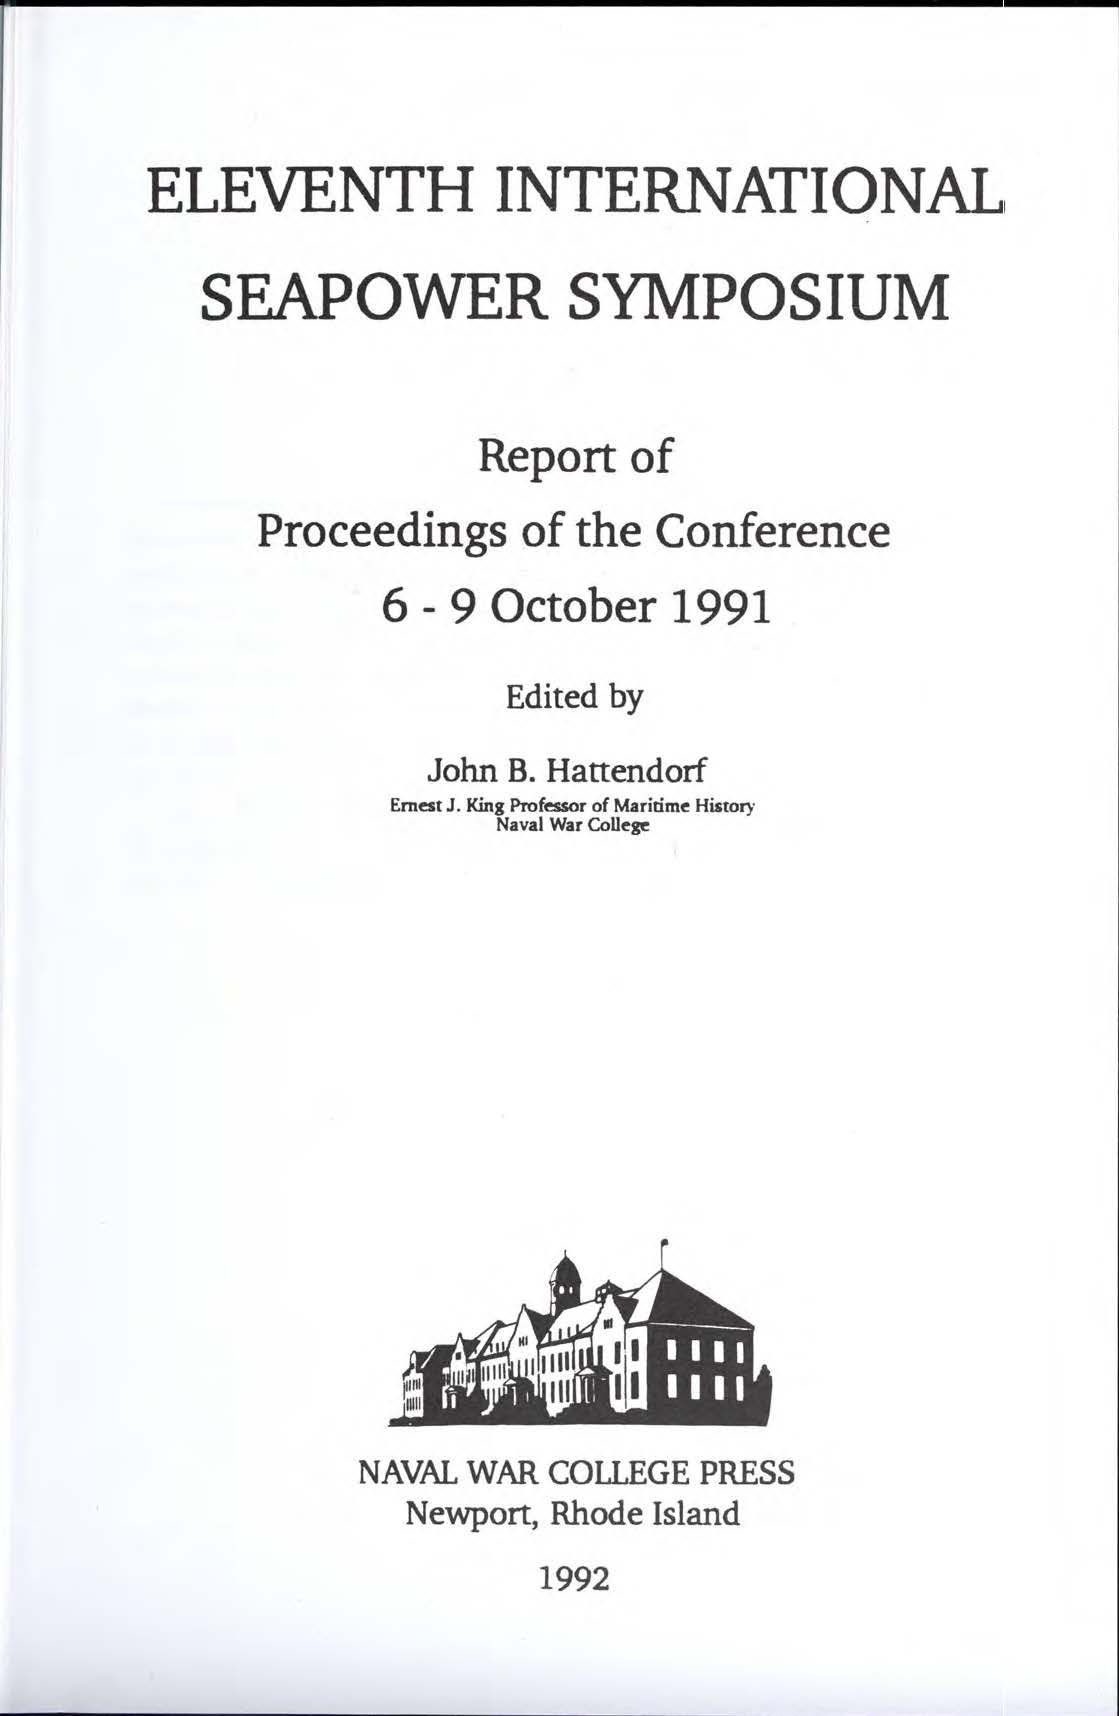 Report of the proceedings, Eleventh International Seapower Symposium